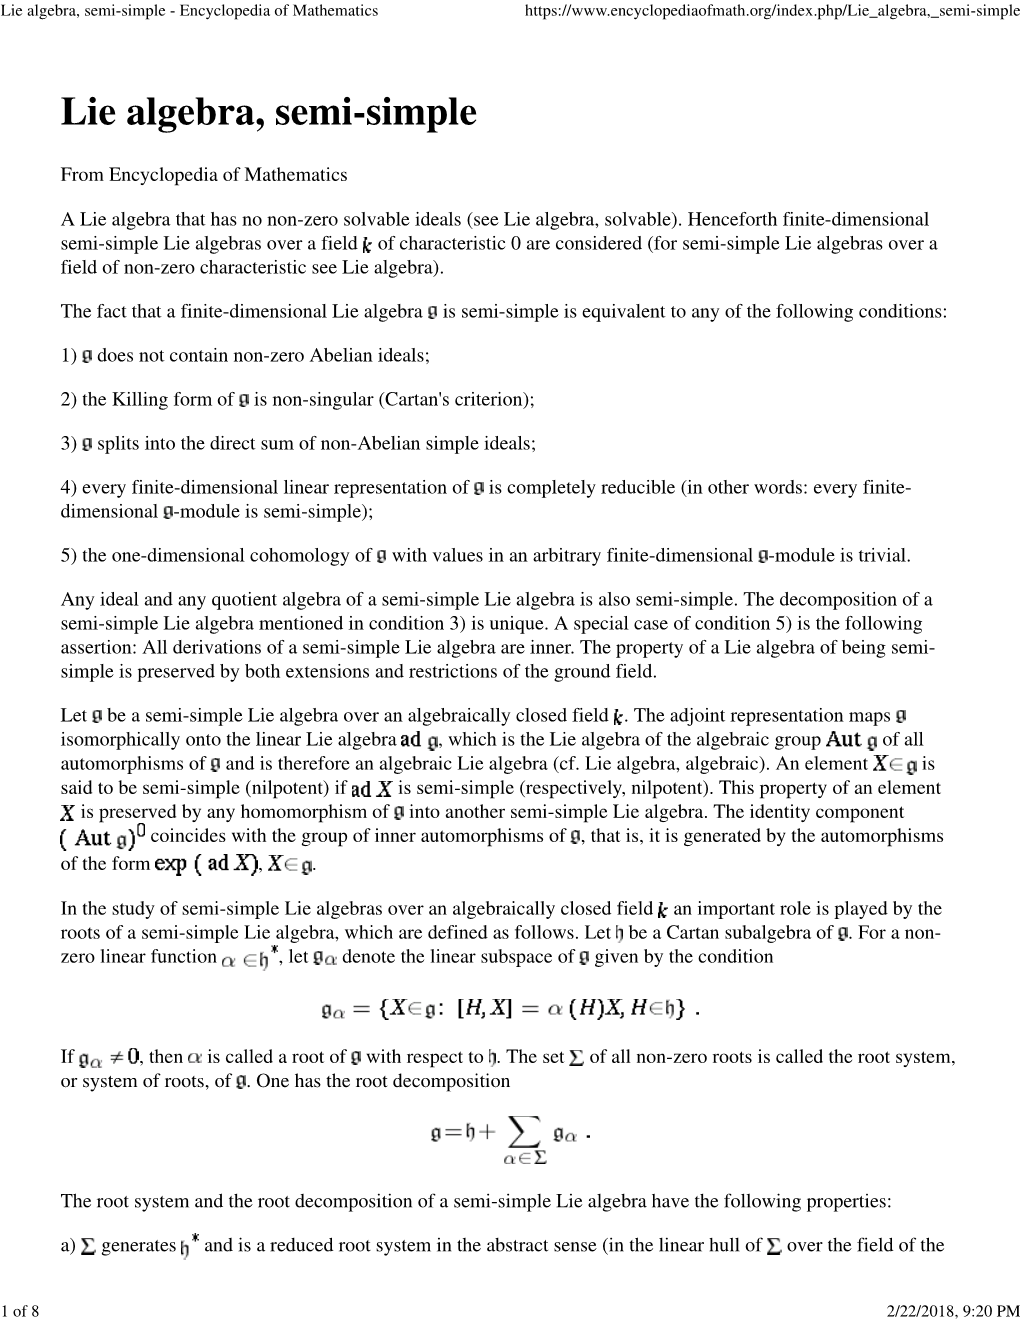 Lie Algebra, Semi-Simple - Encyclopedia of Mathematics